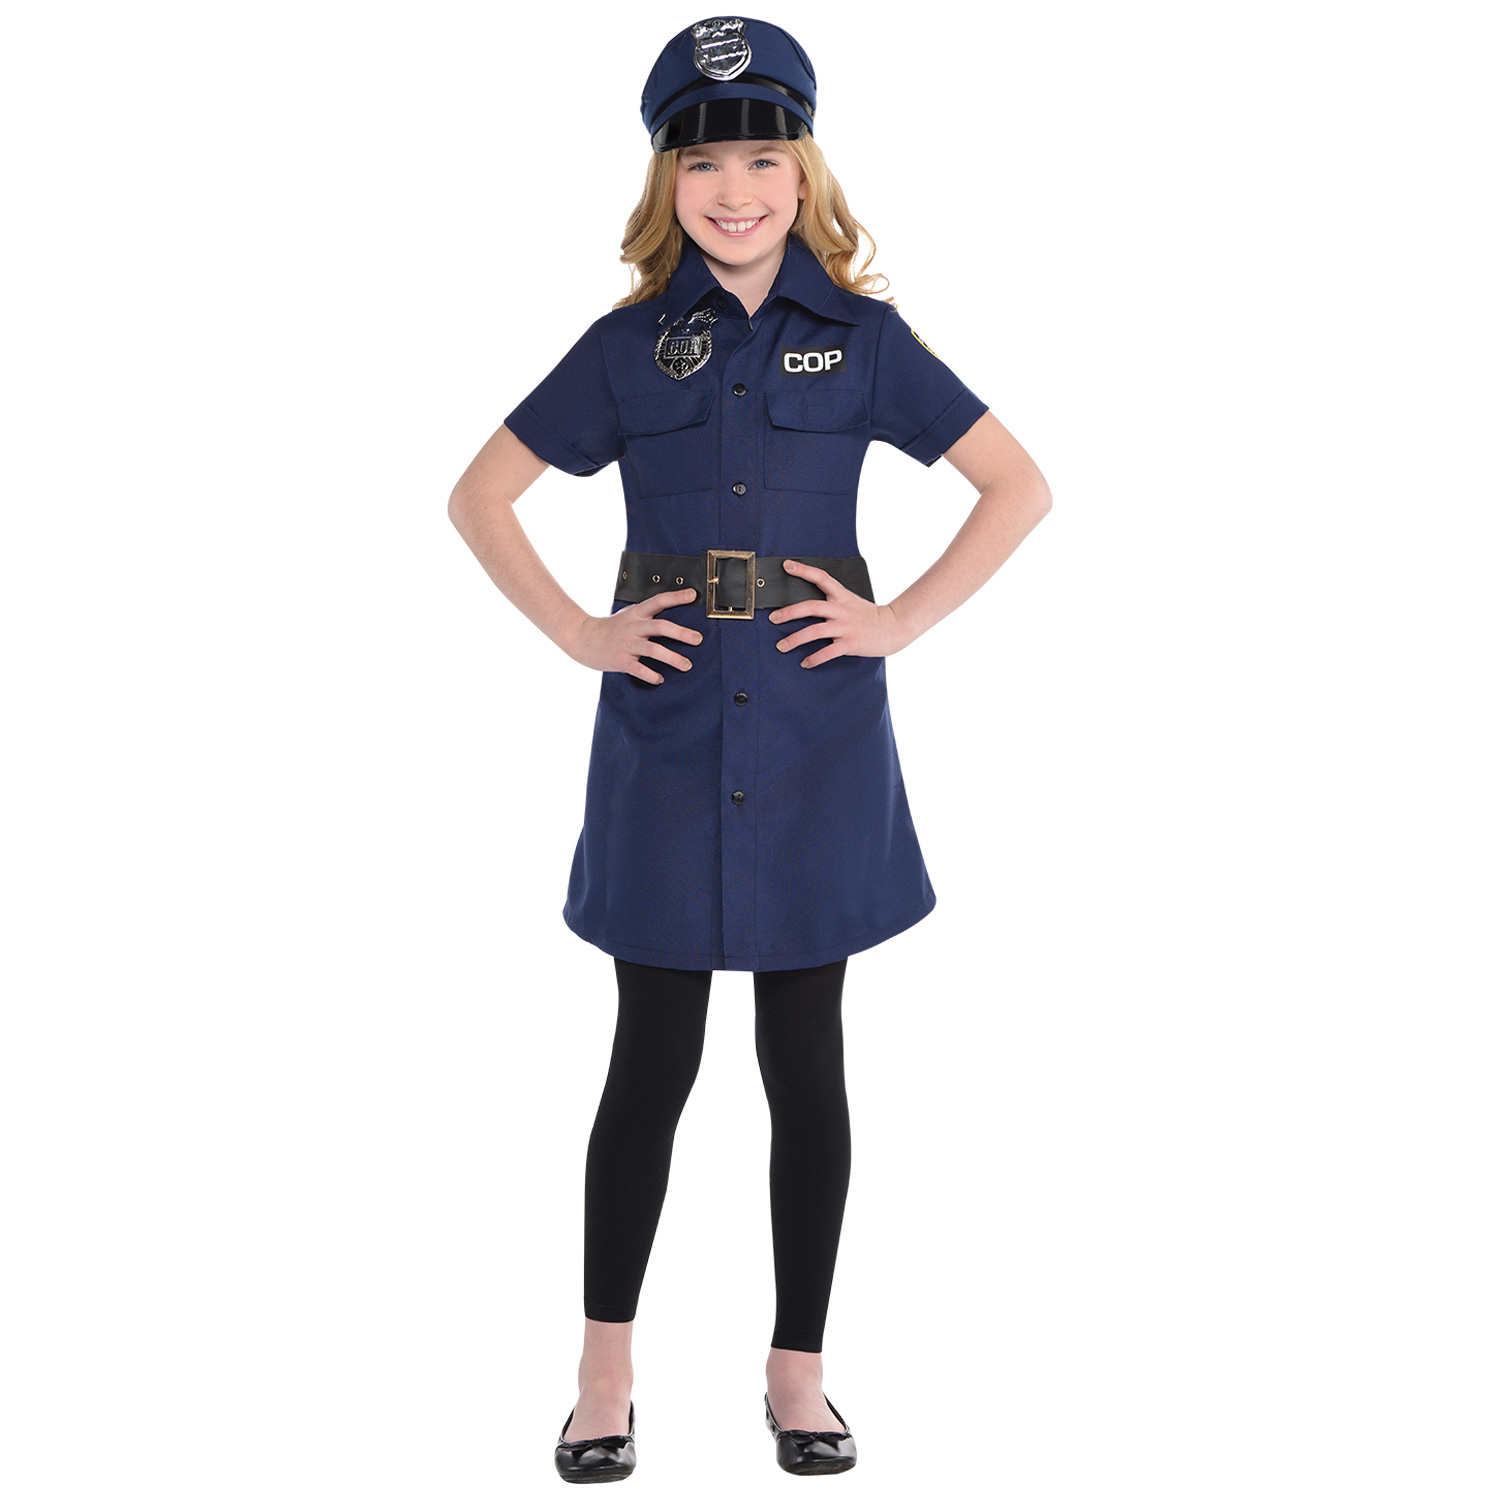 Police Dress - Size Child - 2 PC : Amscan International